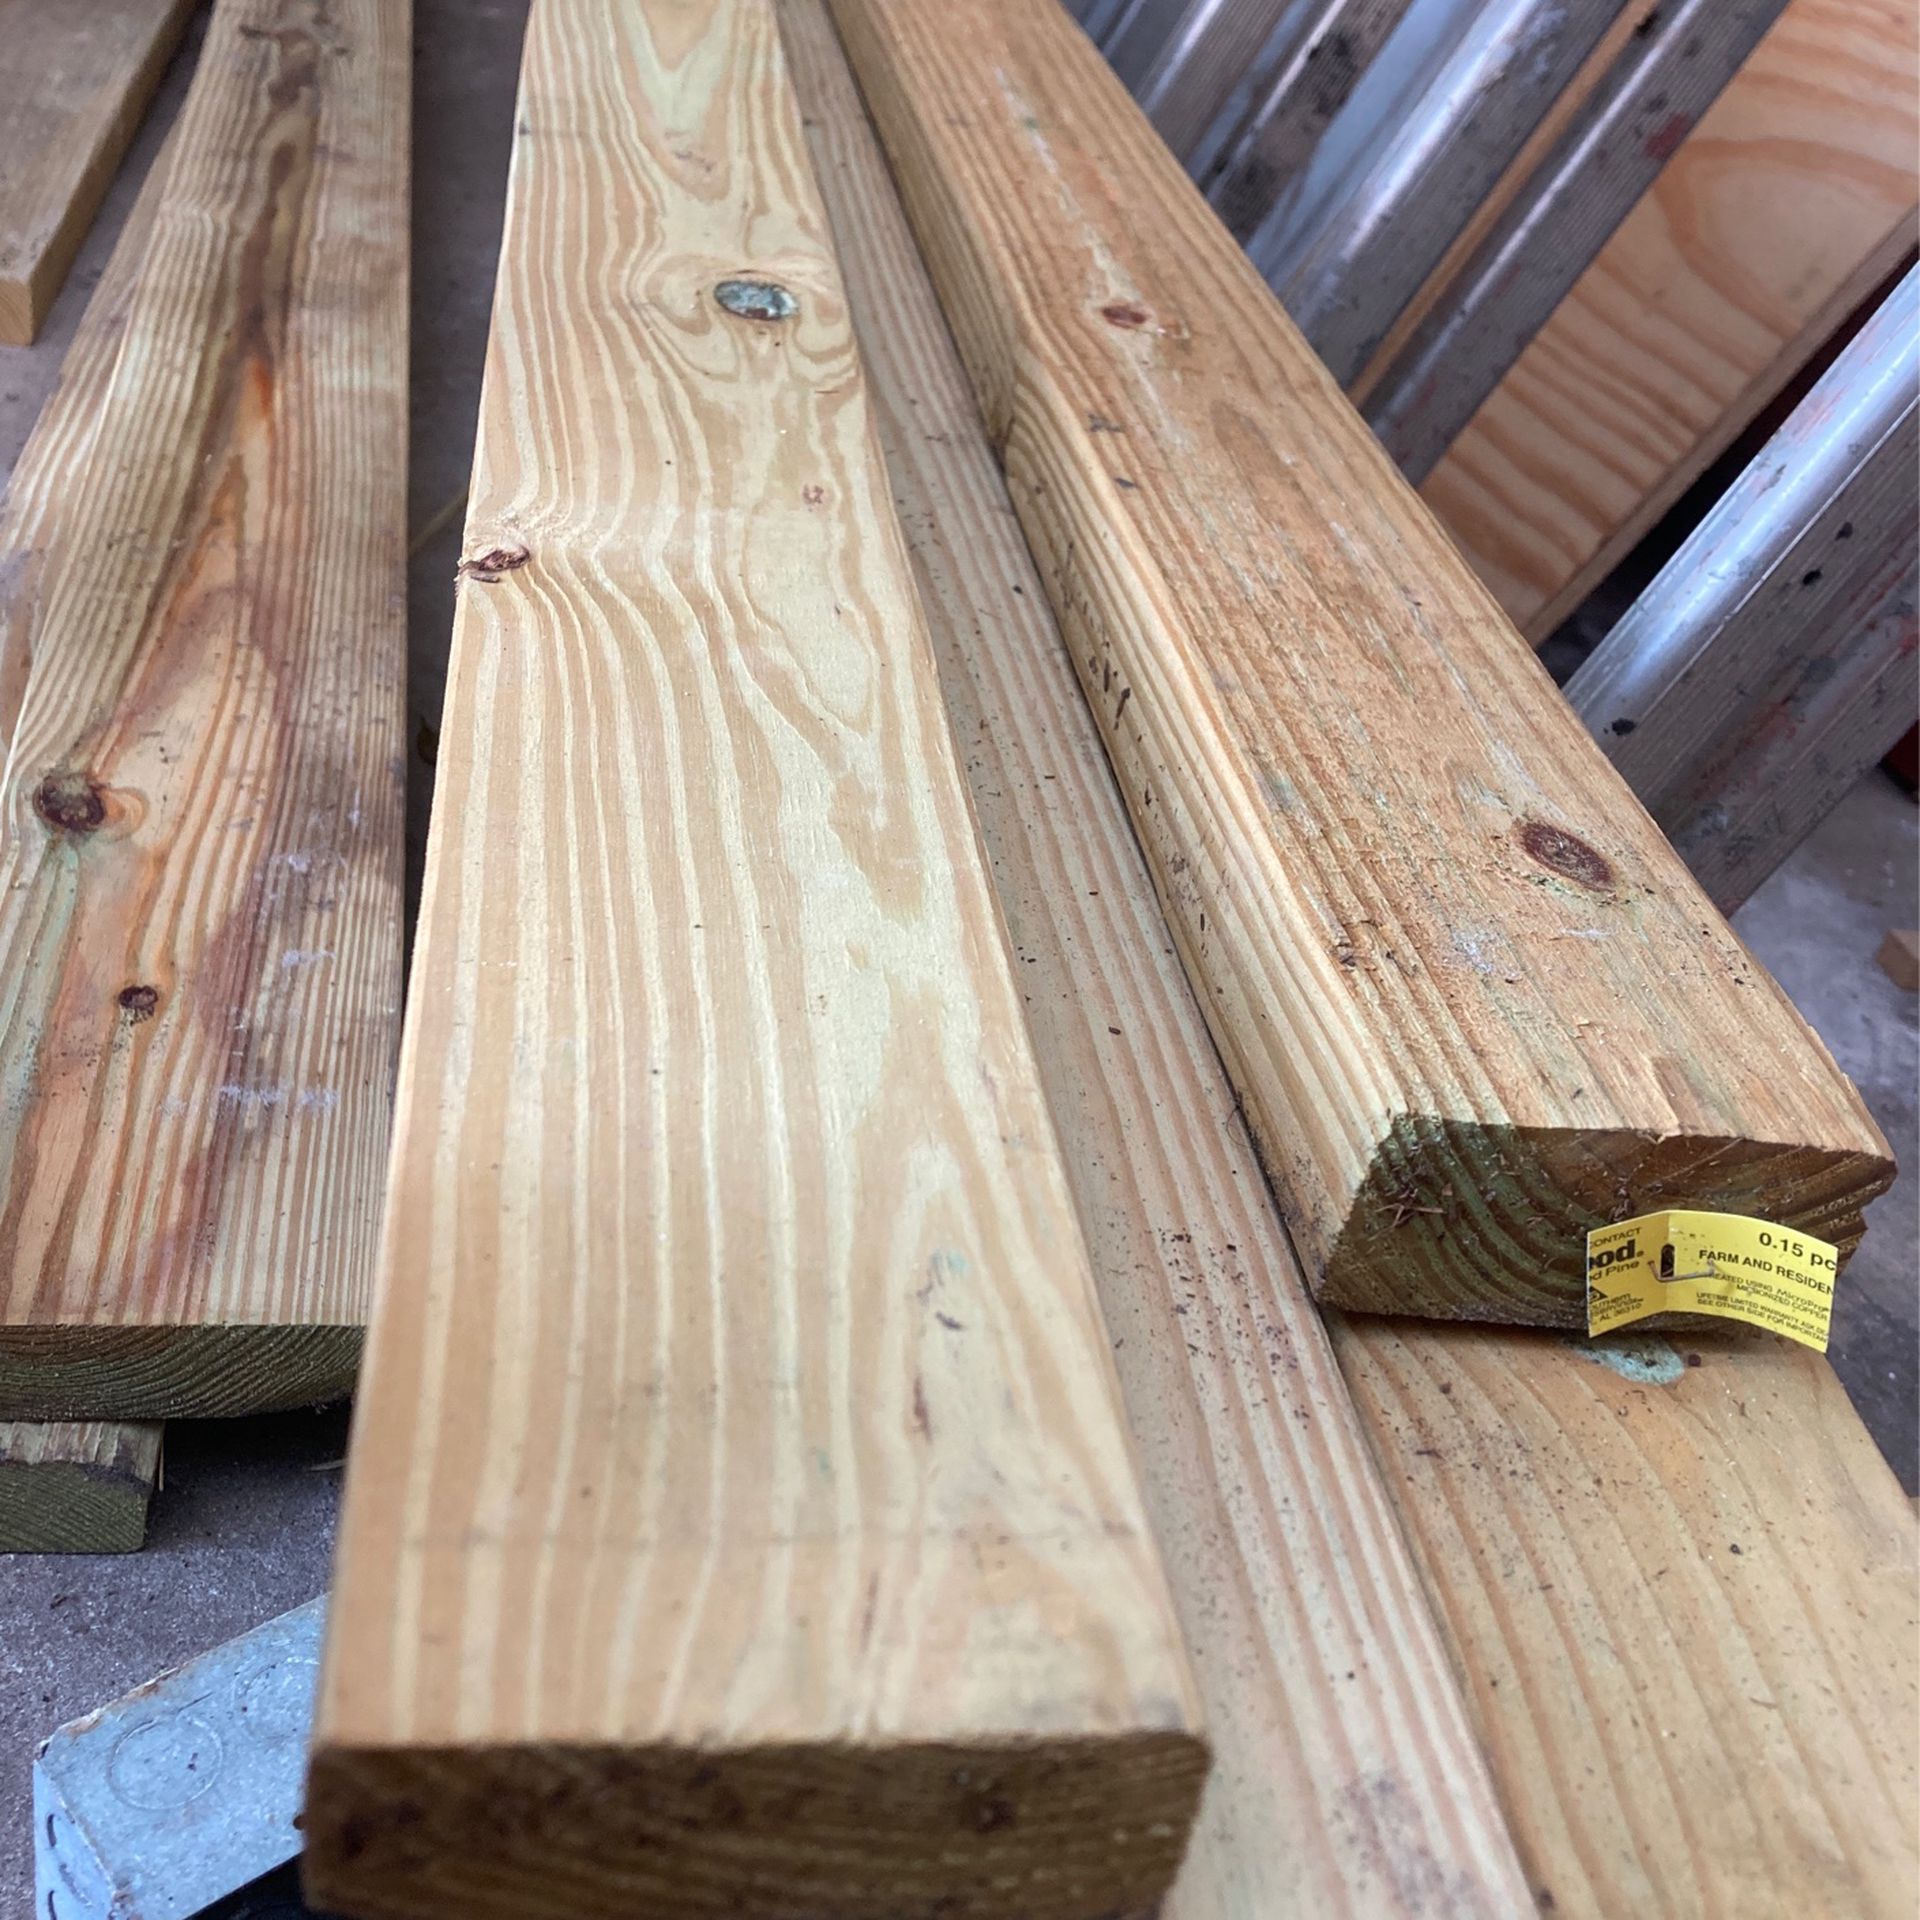 2/4 ...4/6 Pressure treated lumber